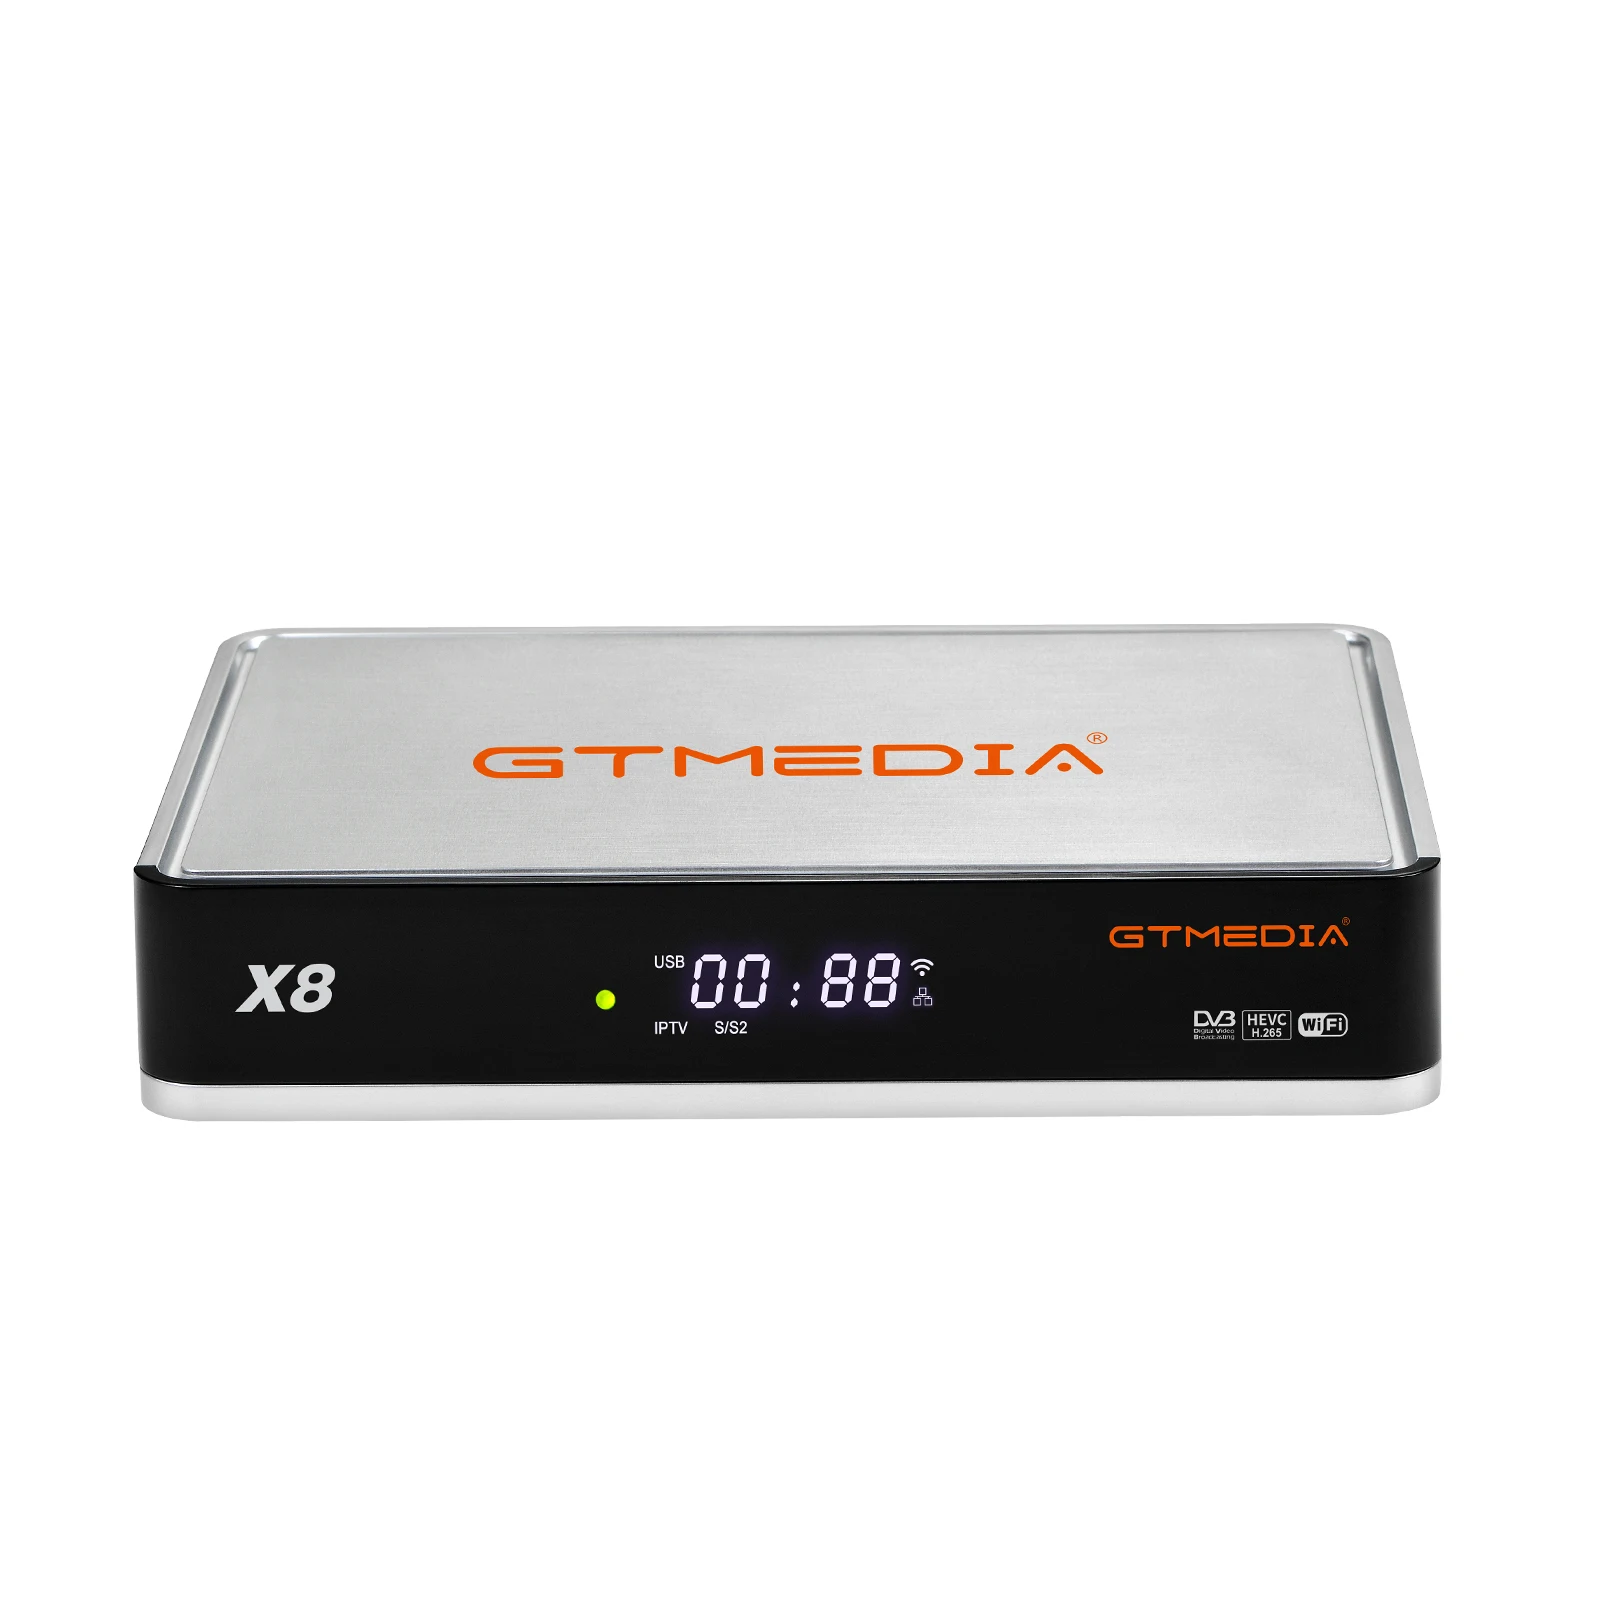 Biss Auto-roll GT MEDIA X8 Satelliten Receiver DVB-S/S2/S2X T2-MI Multi-Stream Sat Receiver für Astra 19.2E Ethernet SCART WiFi 1080P Full HD H.265 HEVC 10bit 